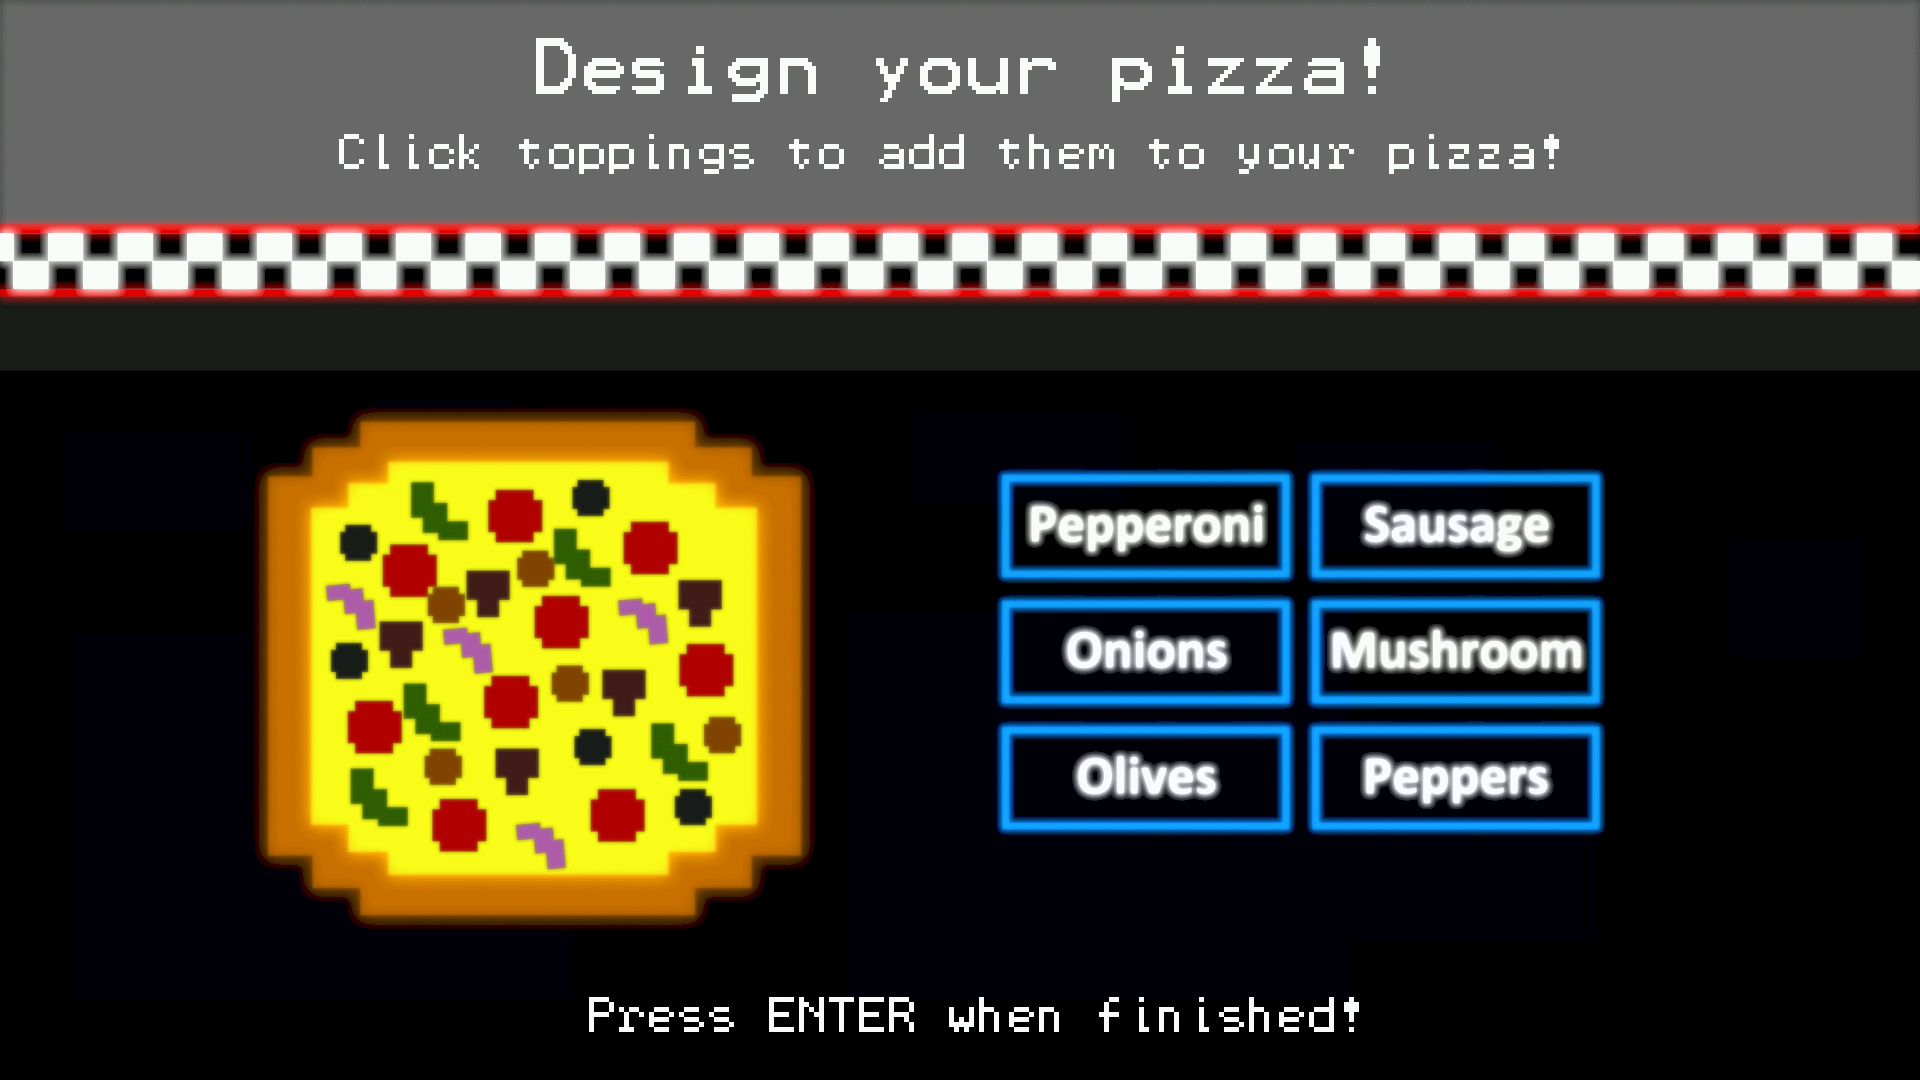 Freddy Fazbear's Pizzeria Simulator no Steam